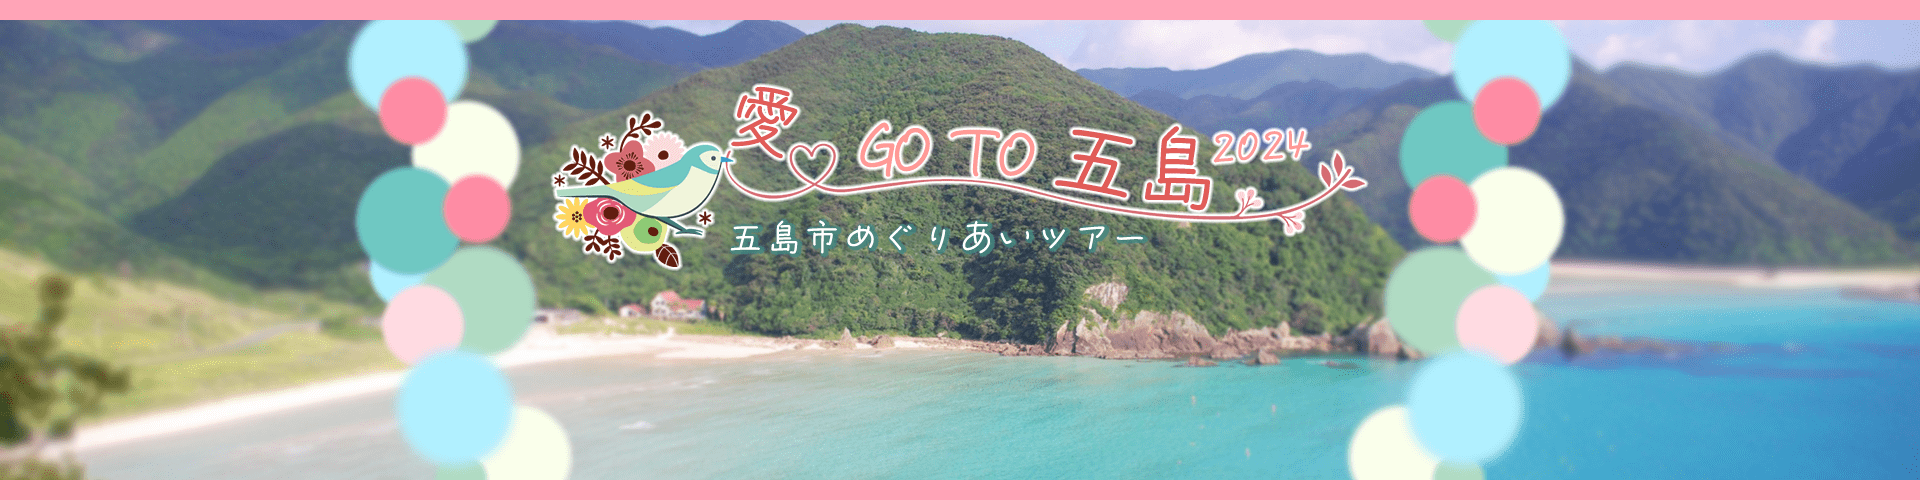 愛 GO TO 五島